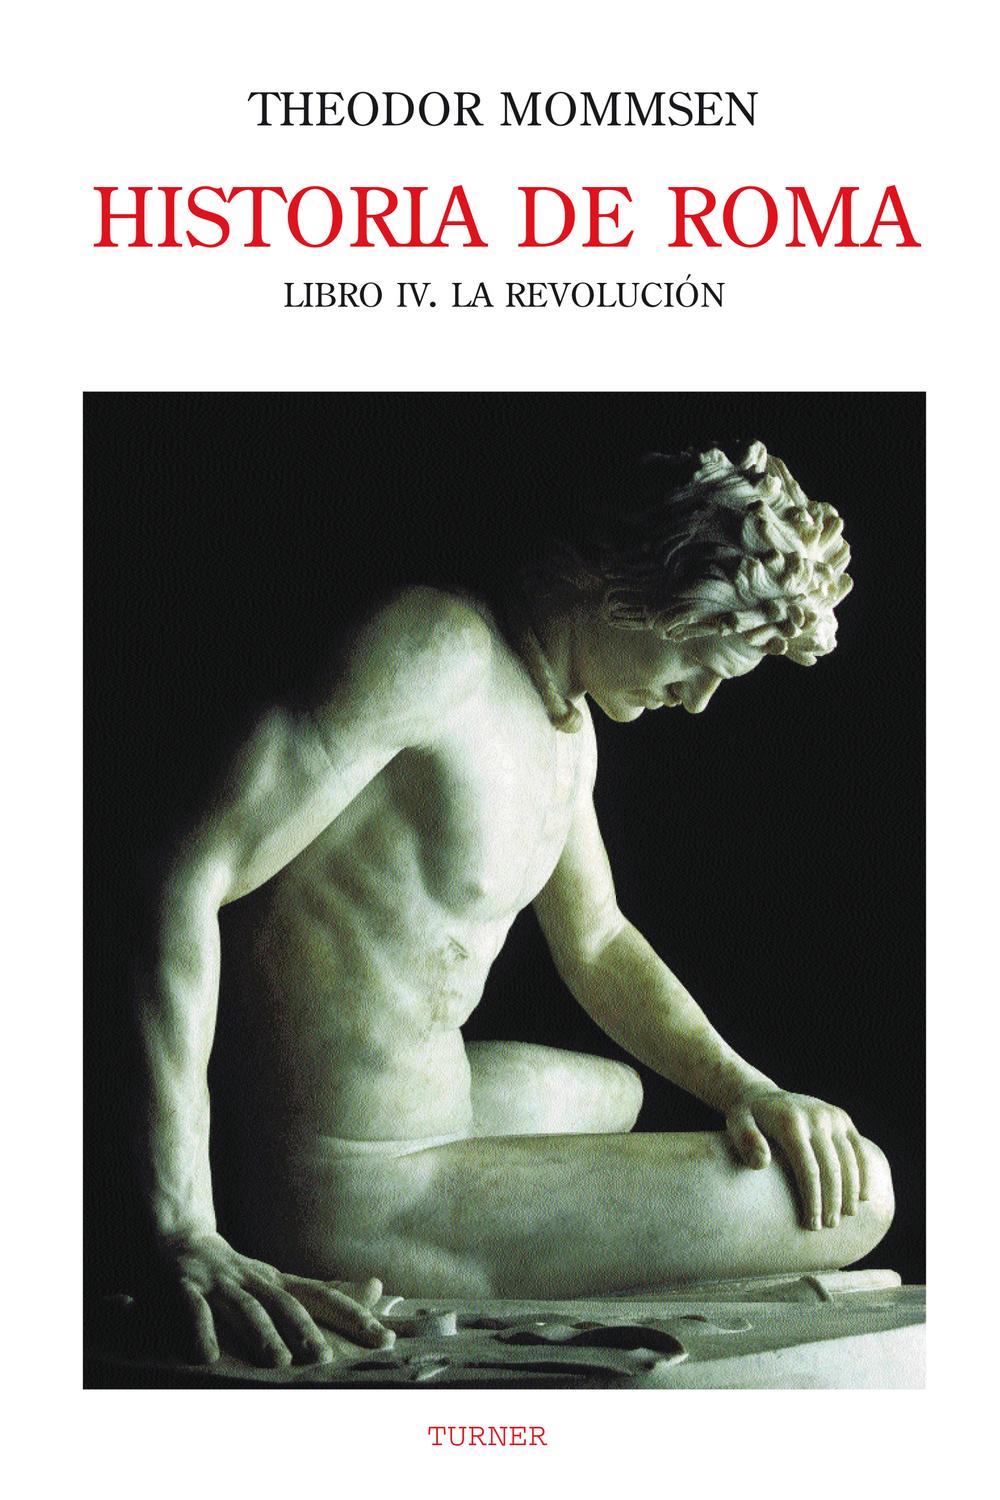 Historia de Roma. Libro IV - Theodor Mommsen, Enriq Satu?,Alejo Garc?a Moreno, Luis Alberto Romero,